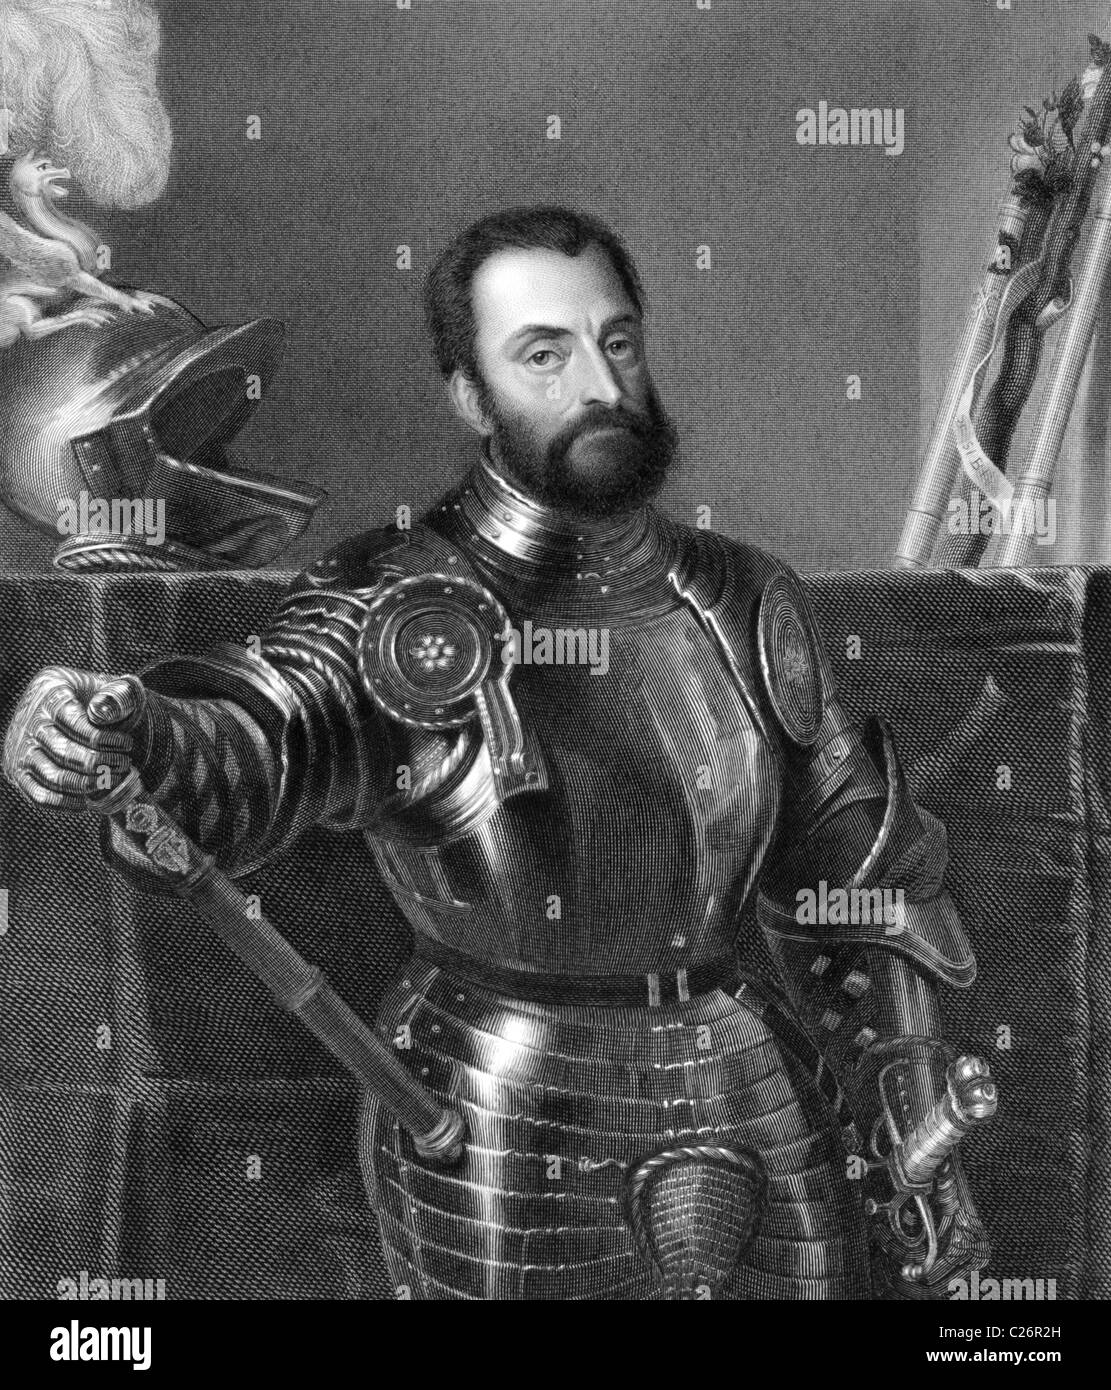 Francesco Maria I della Rovere (1490-1538) on copper engraving from 1841. Italian mercenary warlord and Duke of Urbino. Stock Photo